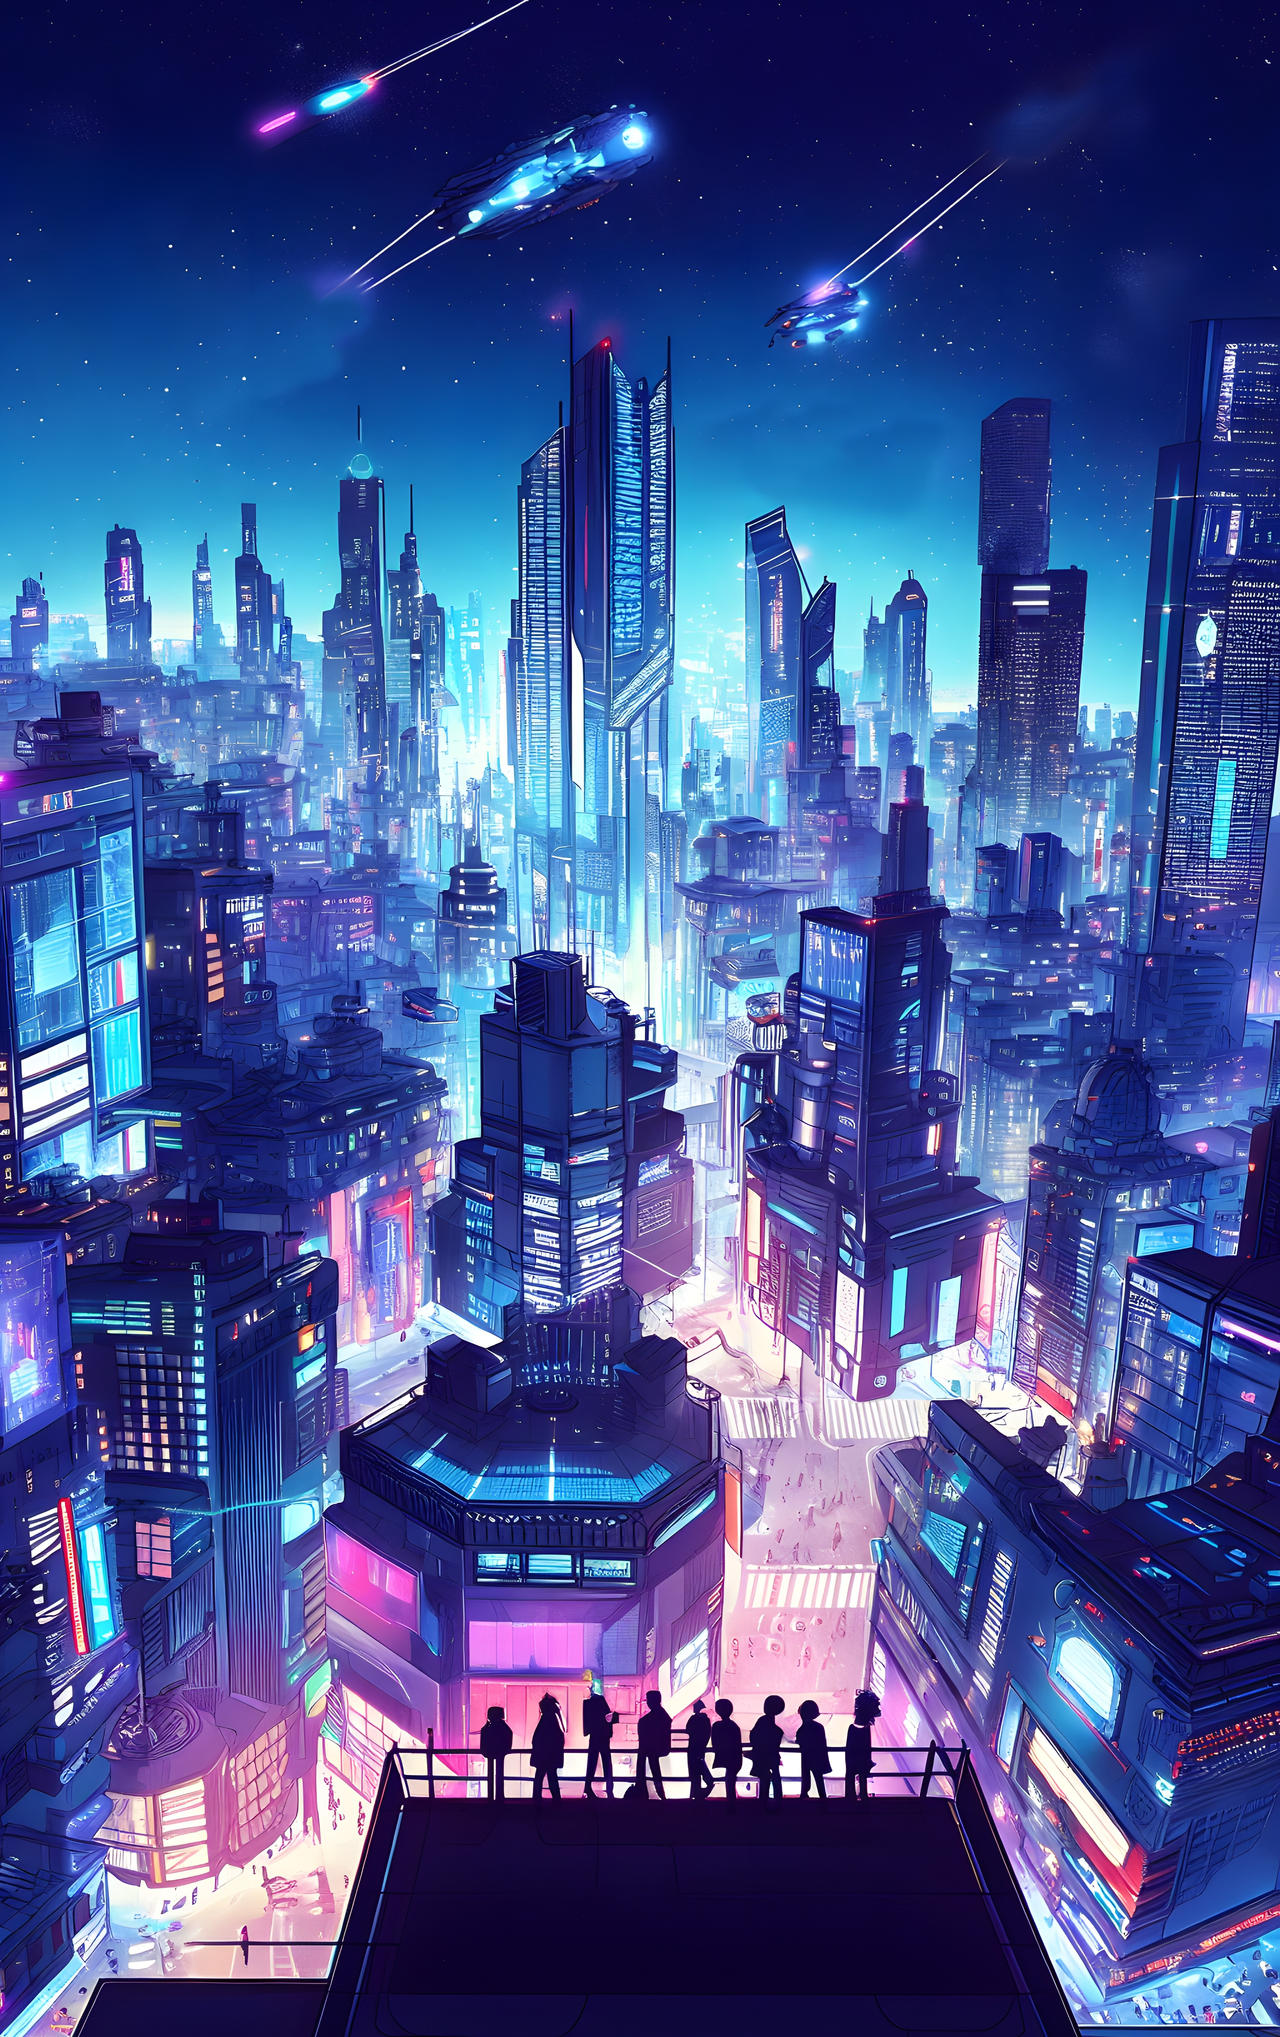 Futuristic Cityscape At Night by FutureRender on DeviantArt